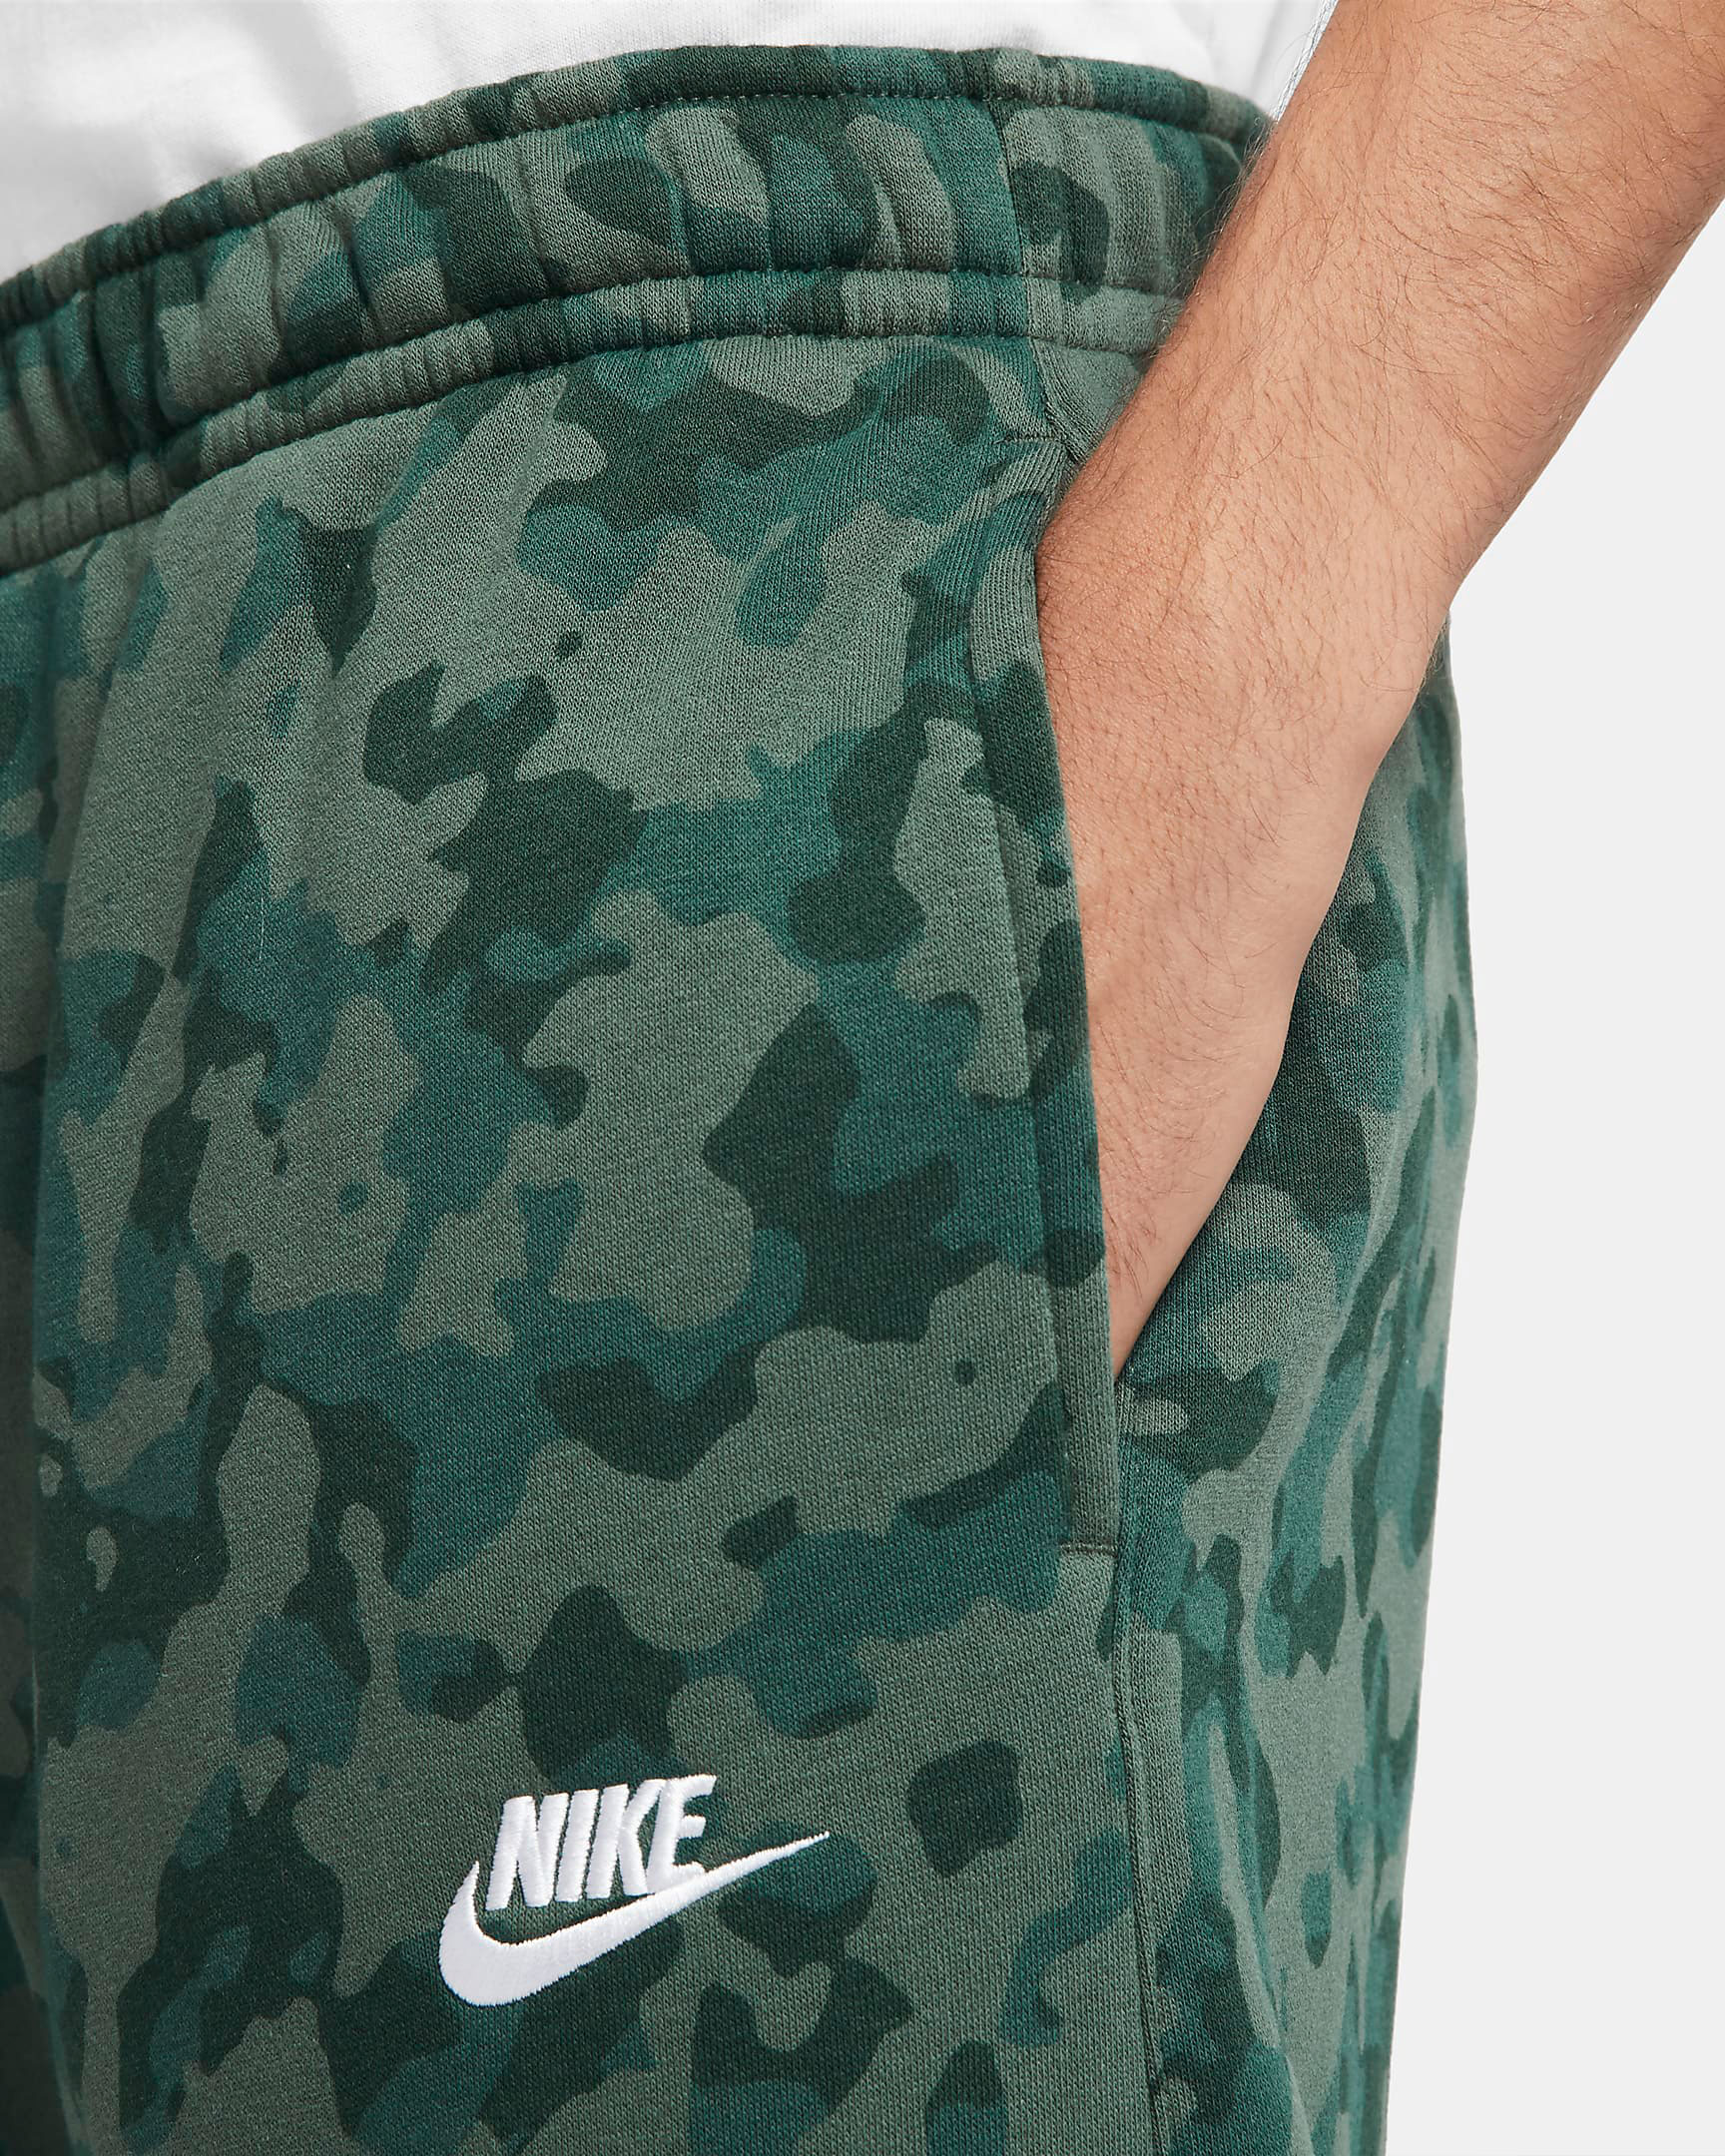 Nike Air Force 1 Craft Galactic Jade Shirts Clothing Outfits